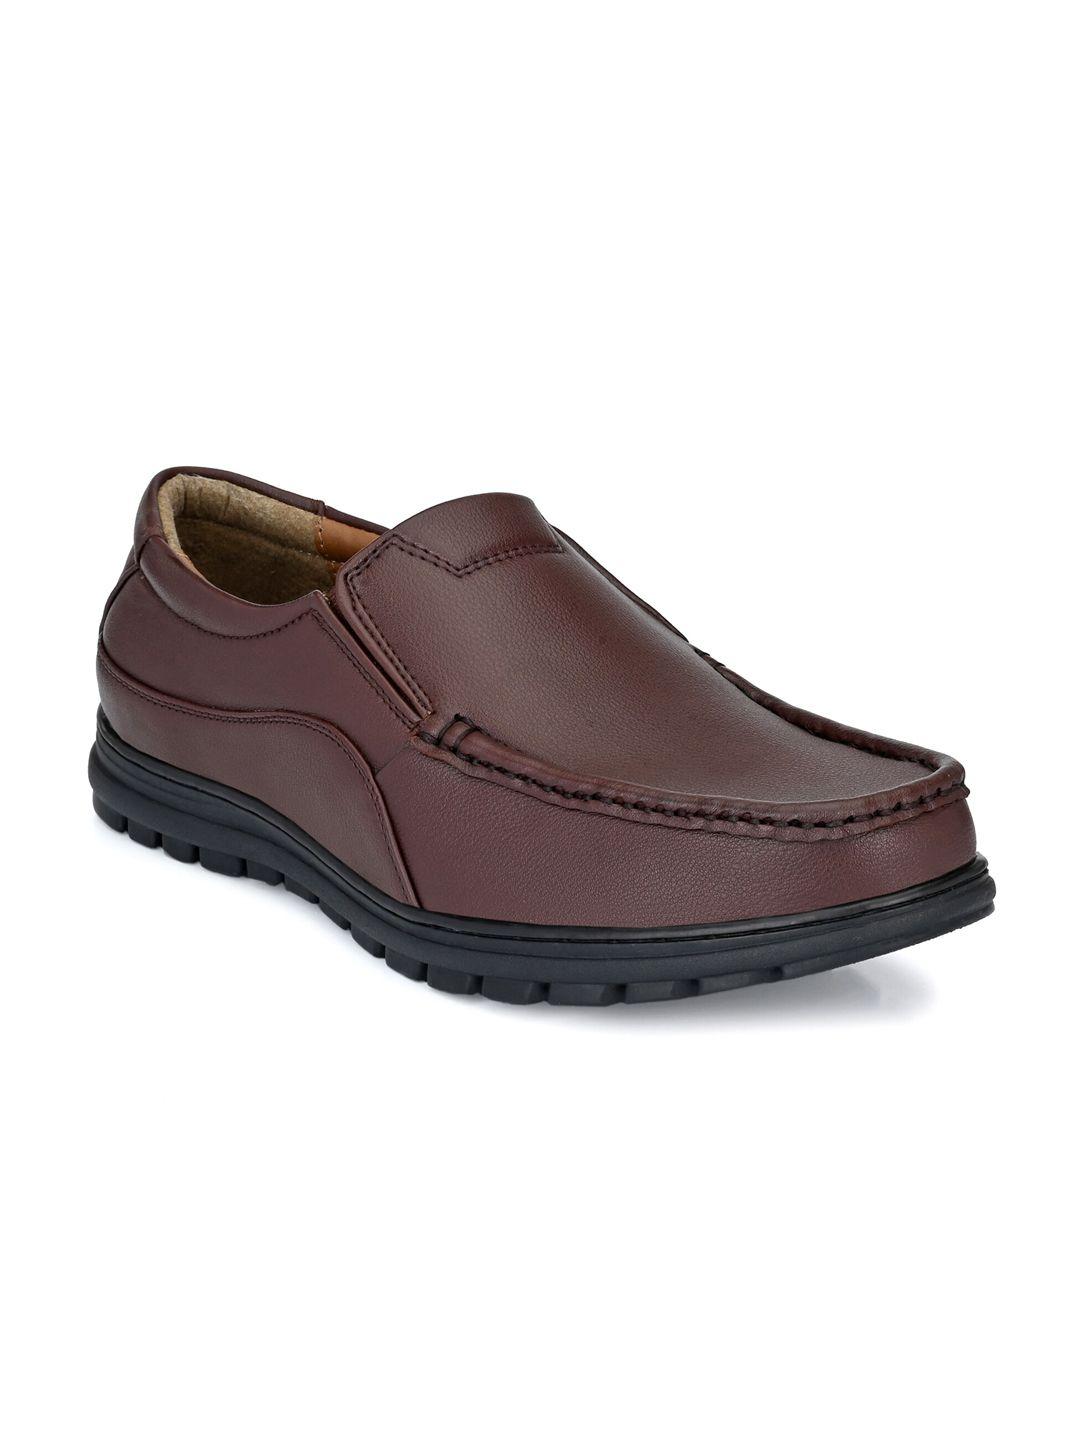 eego italy men slip-ons formal loafer shoes